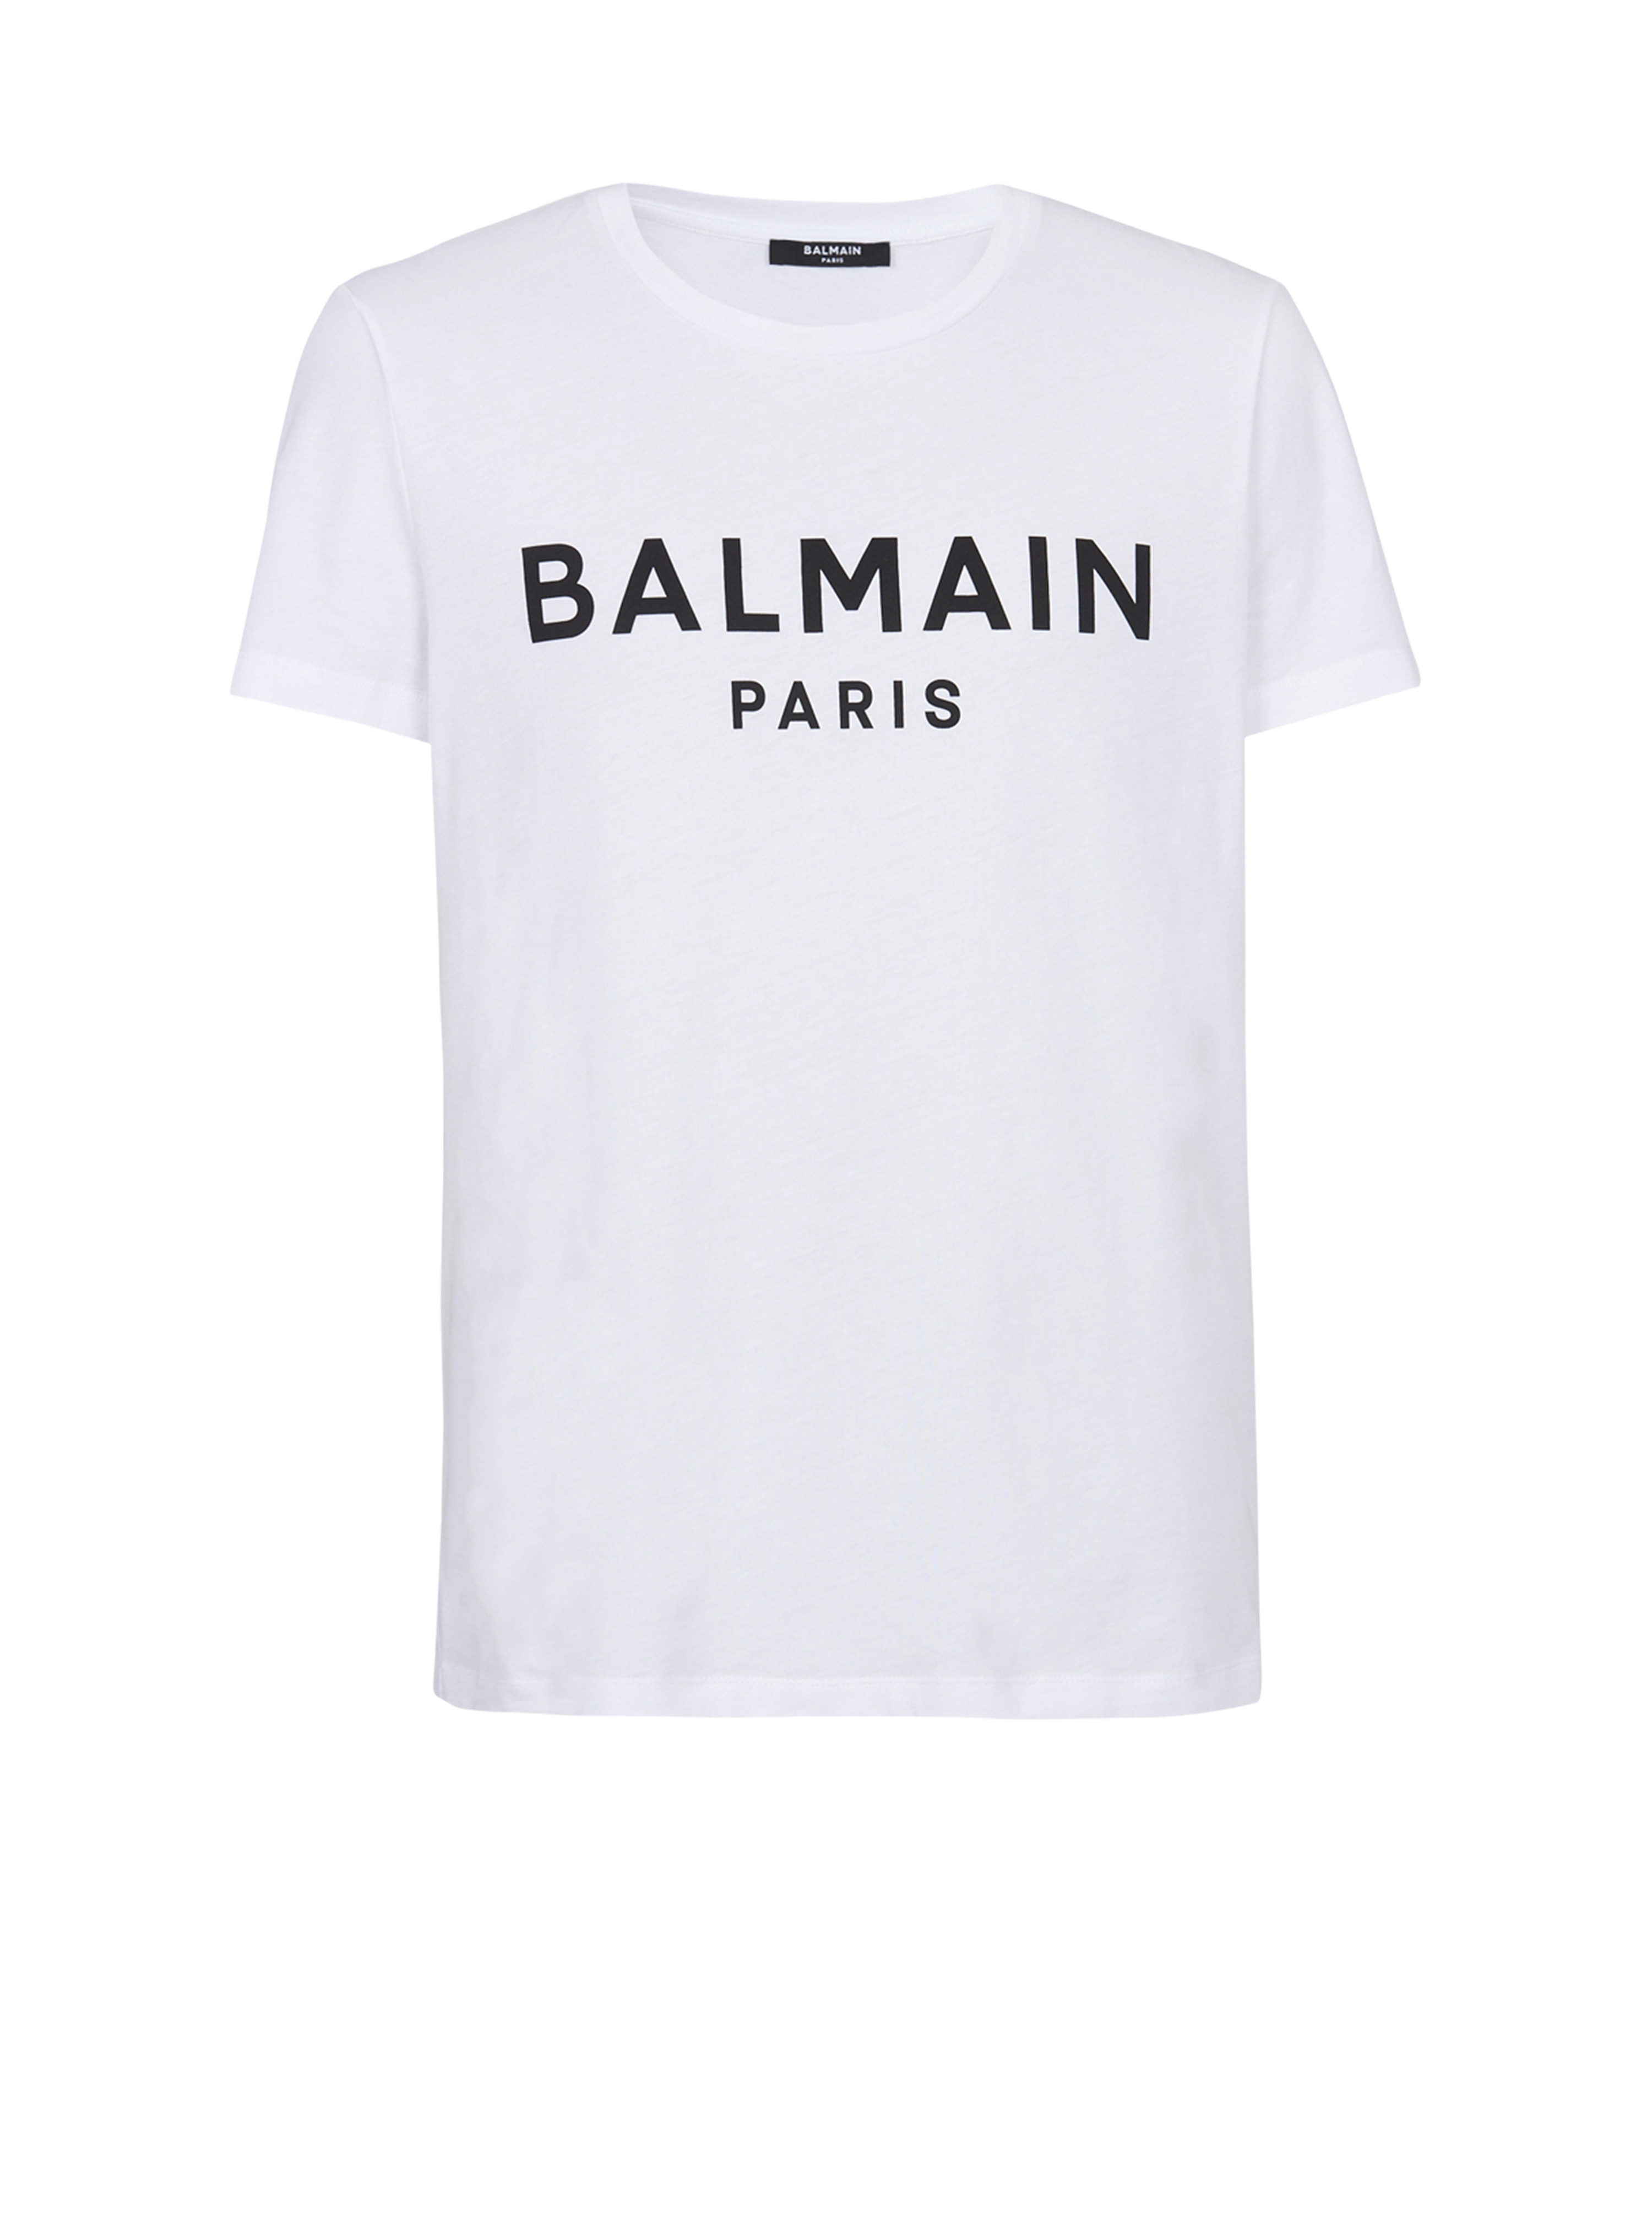 T-shirt en coton imprimé logo Balmain Paris, blanc